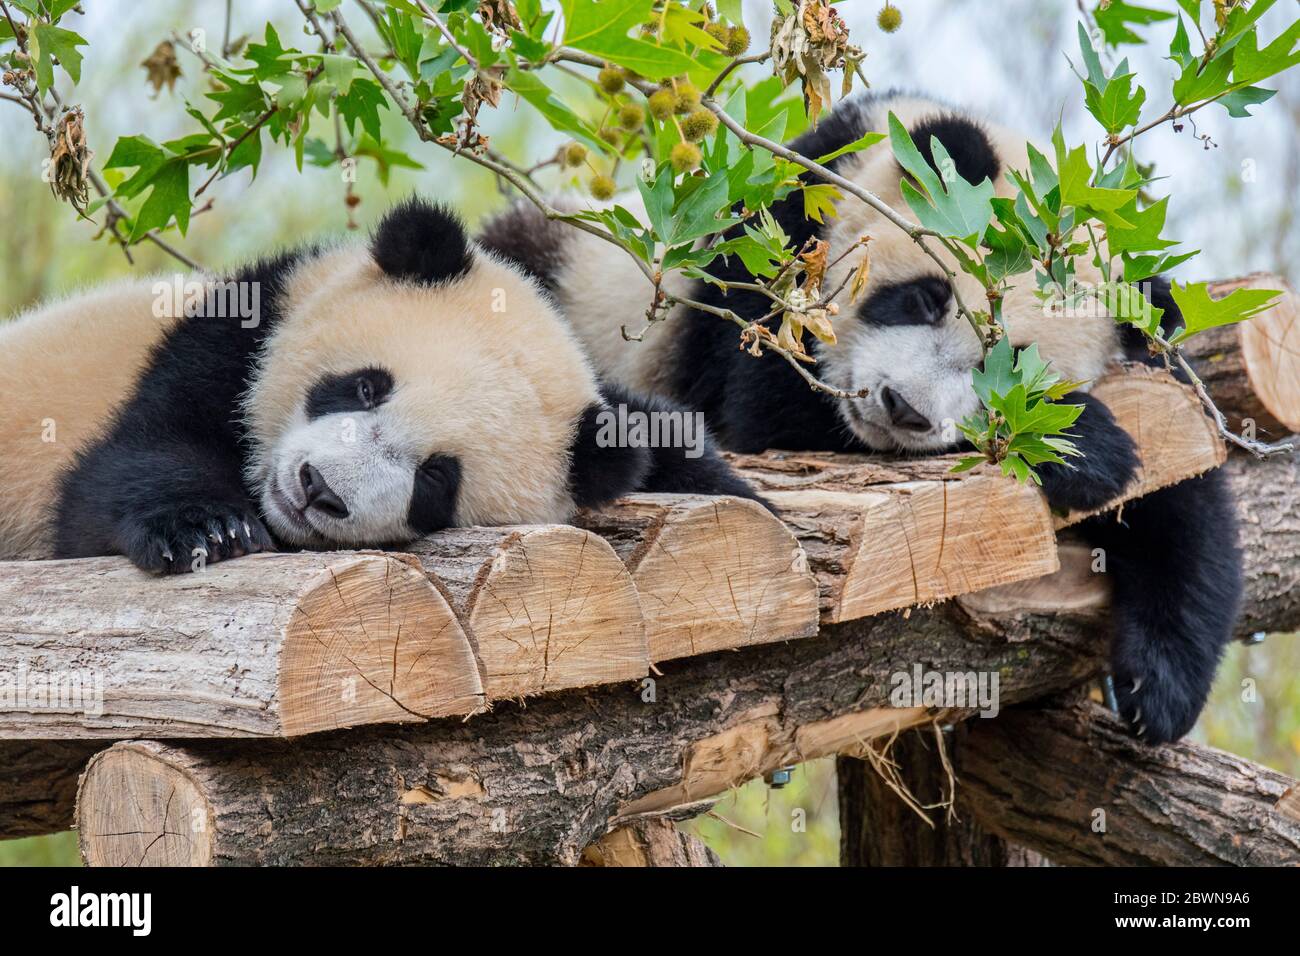 Two 10-months old giant pandas (Ailuropoda melanoleuca) resting on wooden platform in zoo / animal park / zoological garden Stock Photo